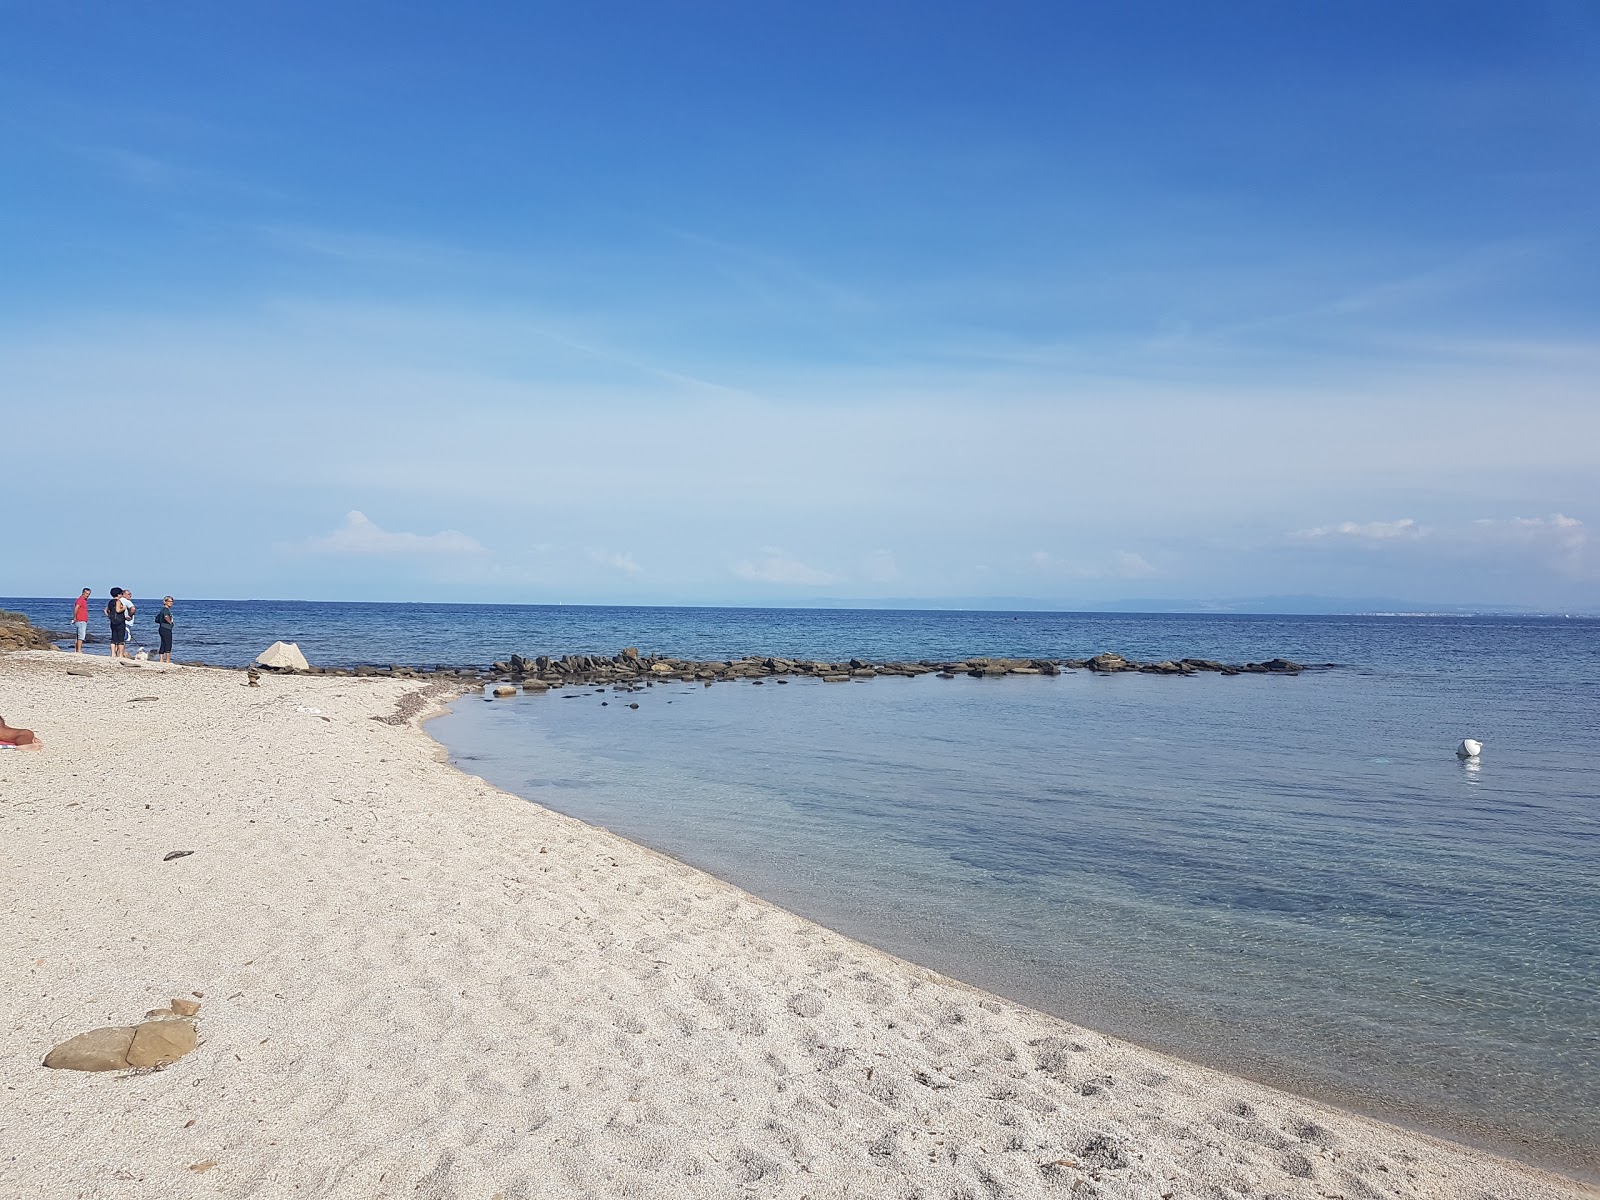 Foto van Spiaggia delle Tonnare met gemiddeld niveau van netheid